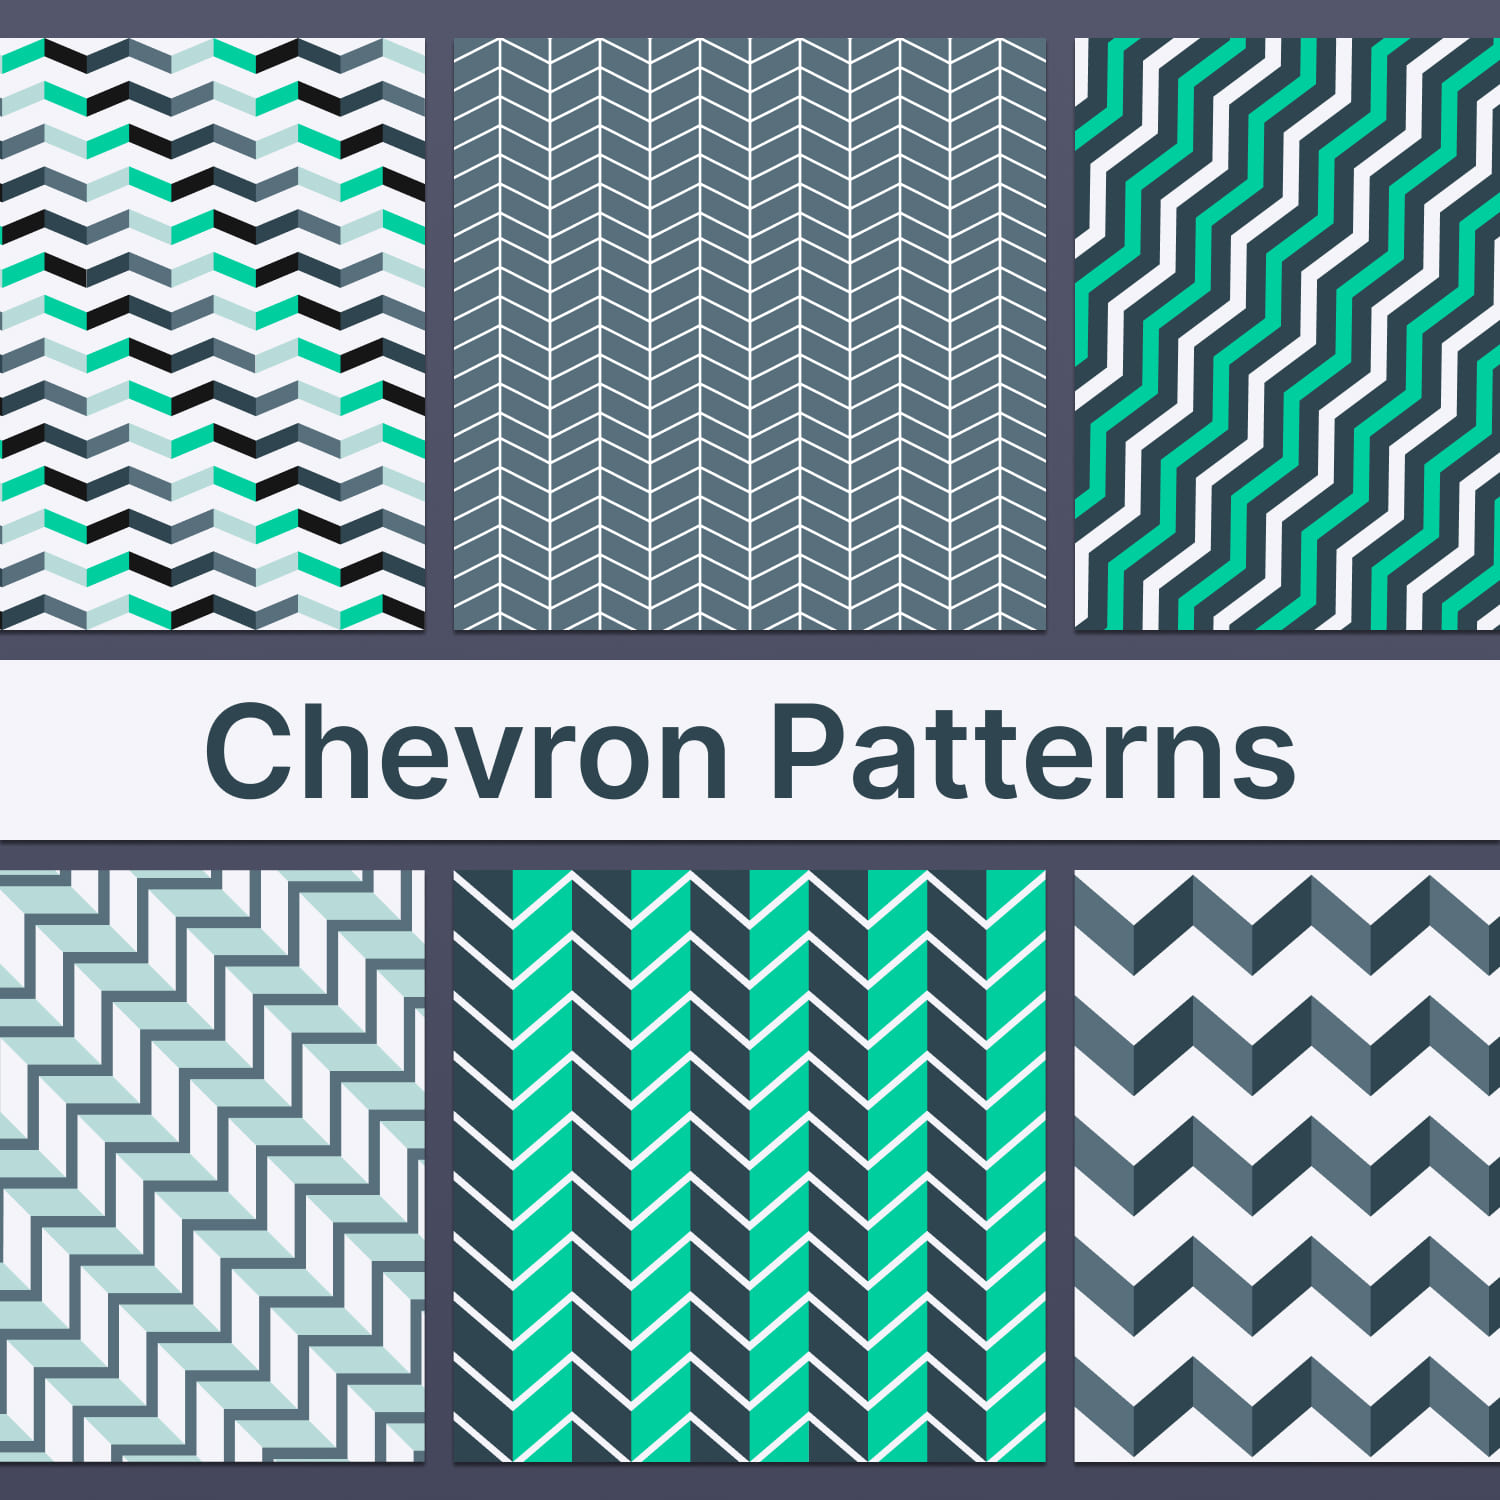 Chevron Patterns Green & Grey.